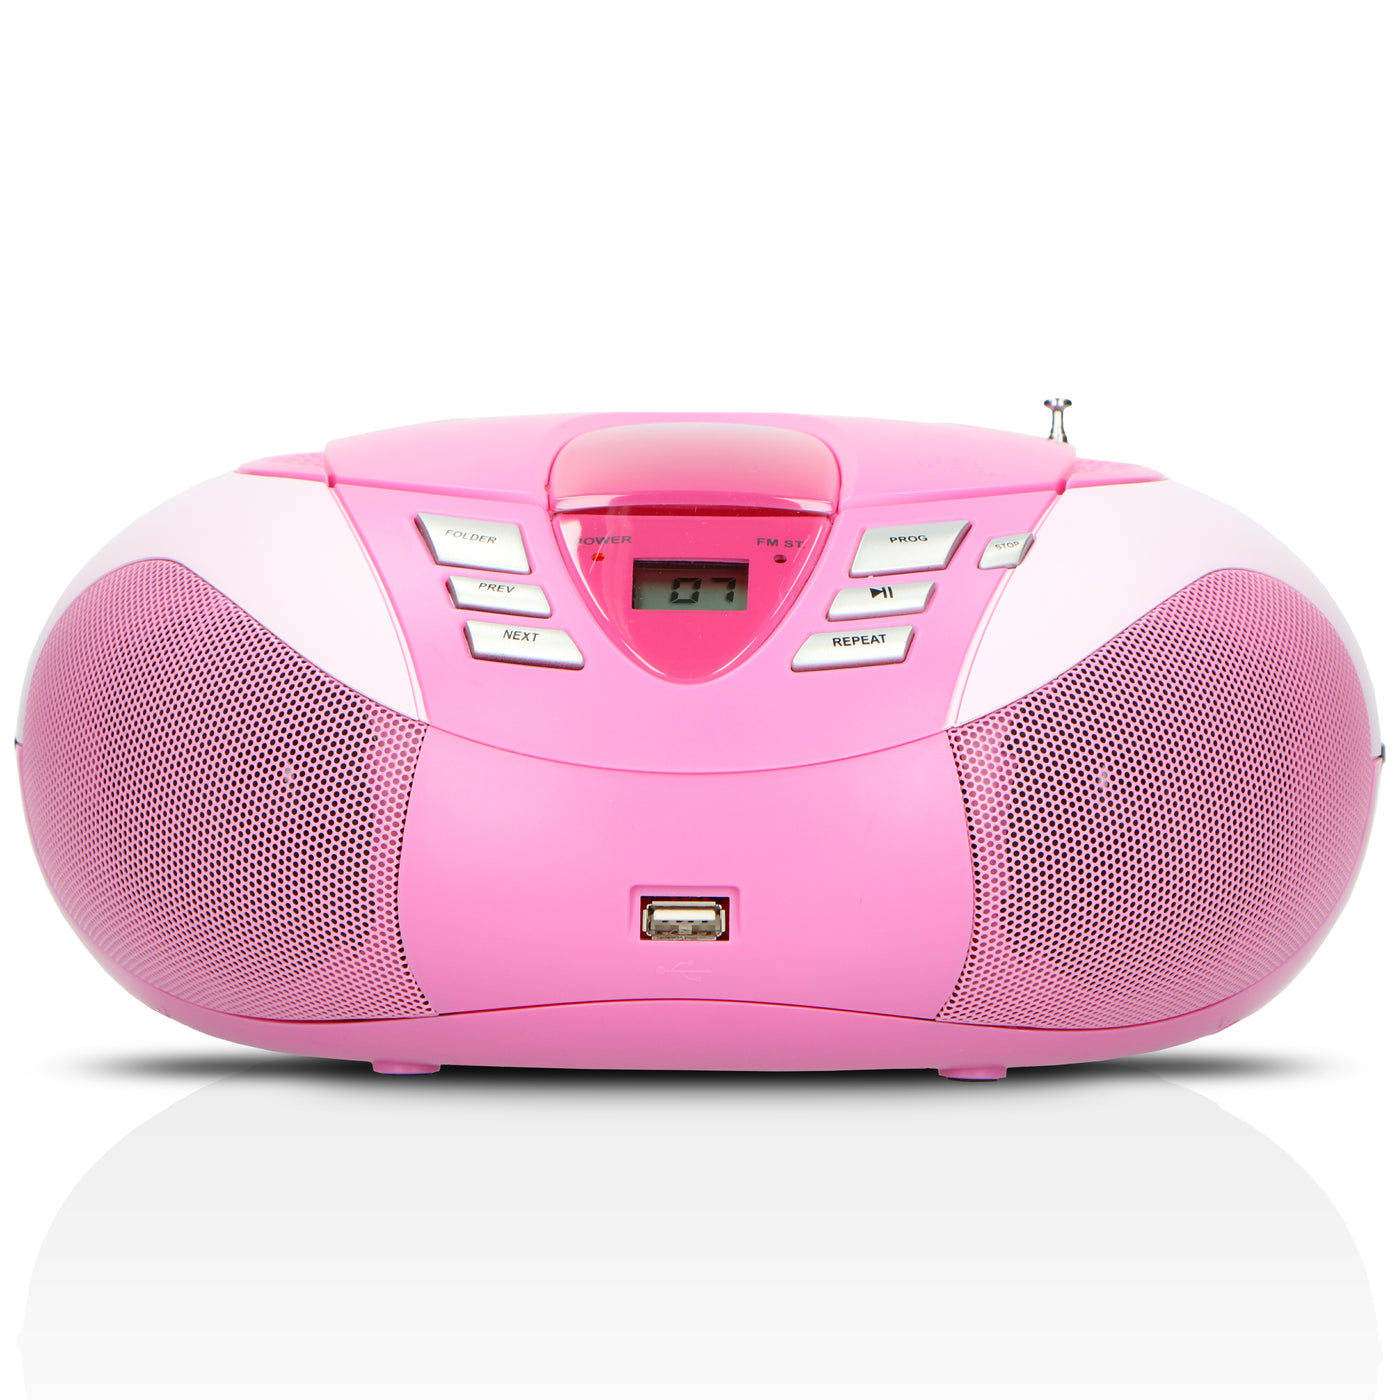 LENCO SCD-37 and -Catalog - Pink player Lenco Radio FM CD - USB – Portable Pink USB